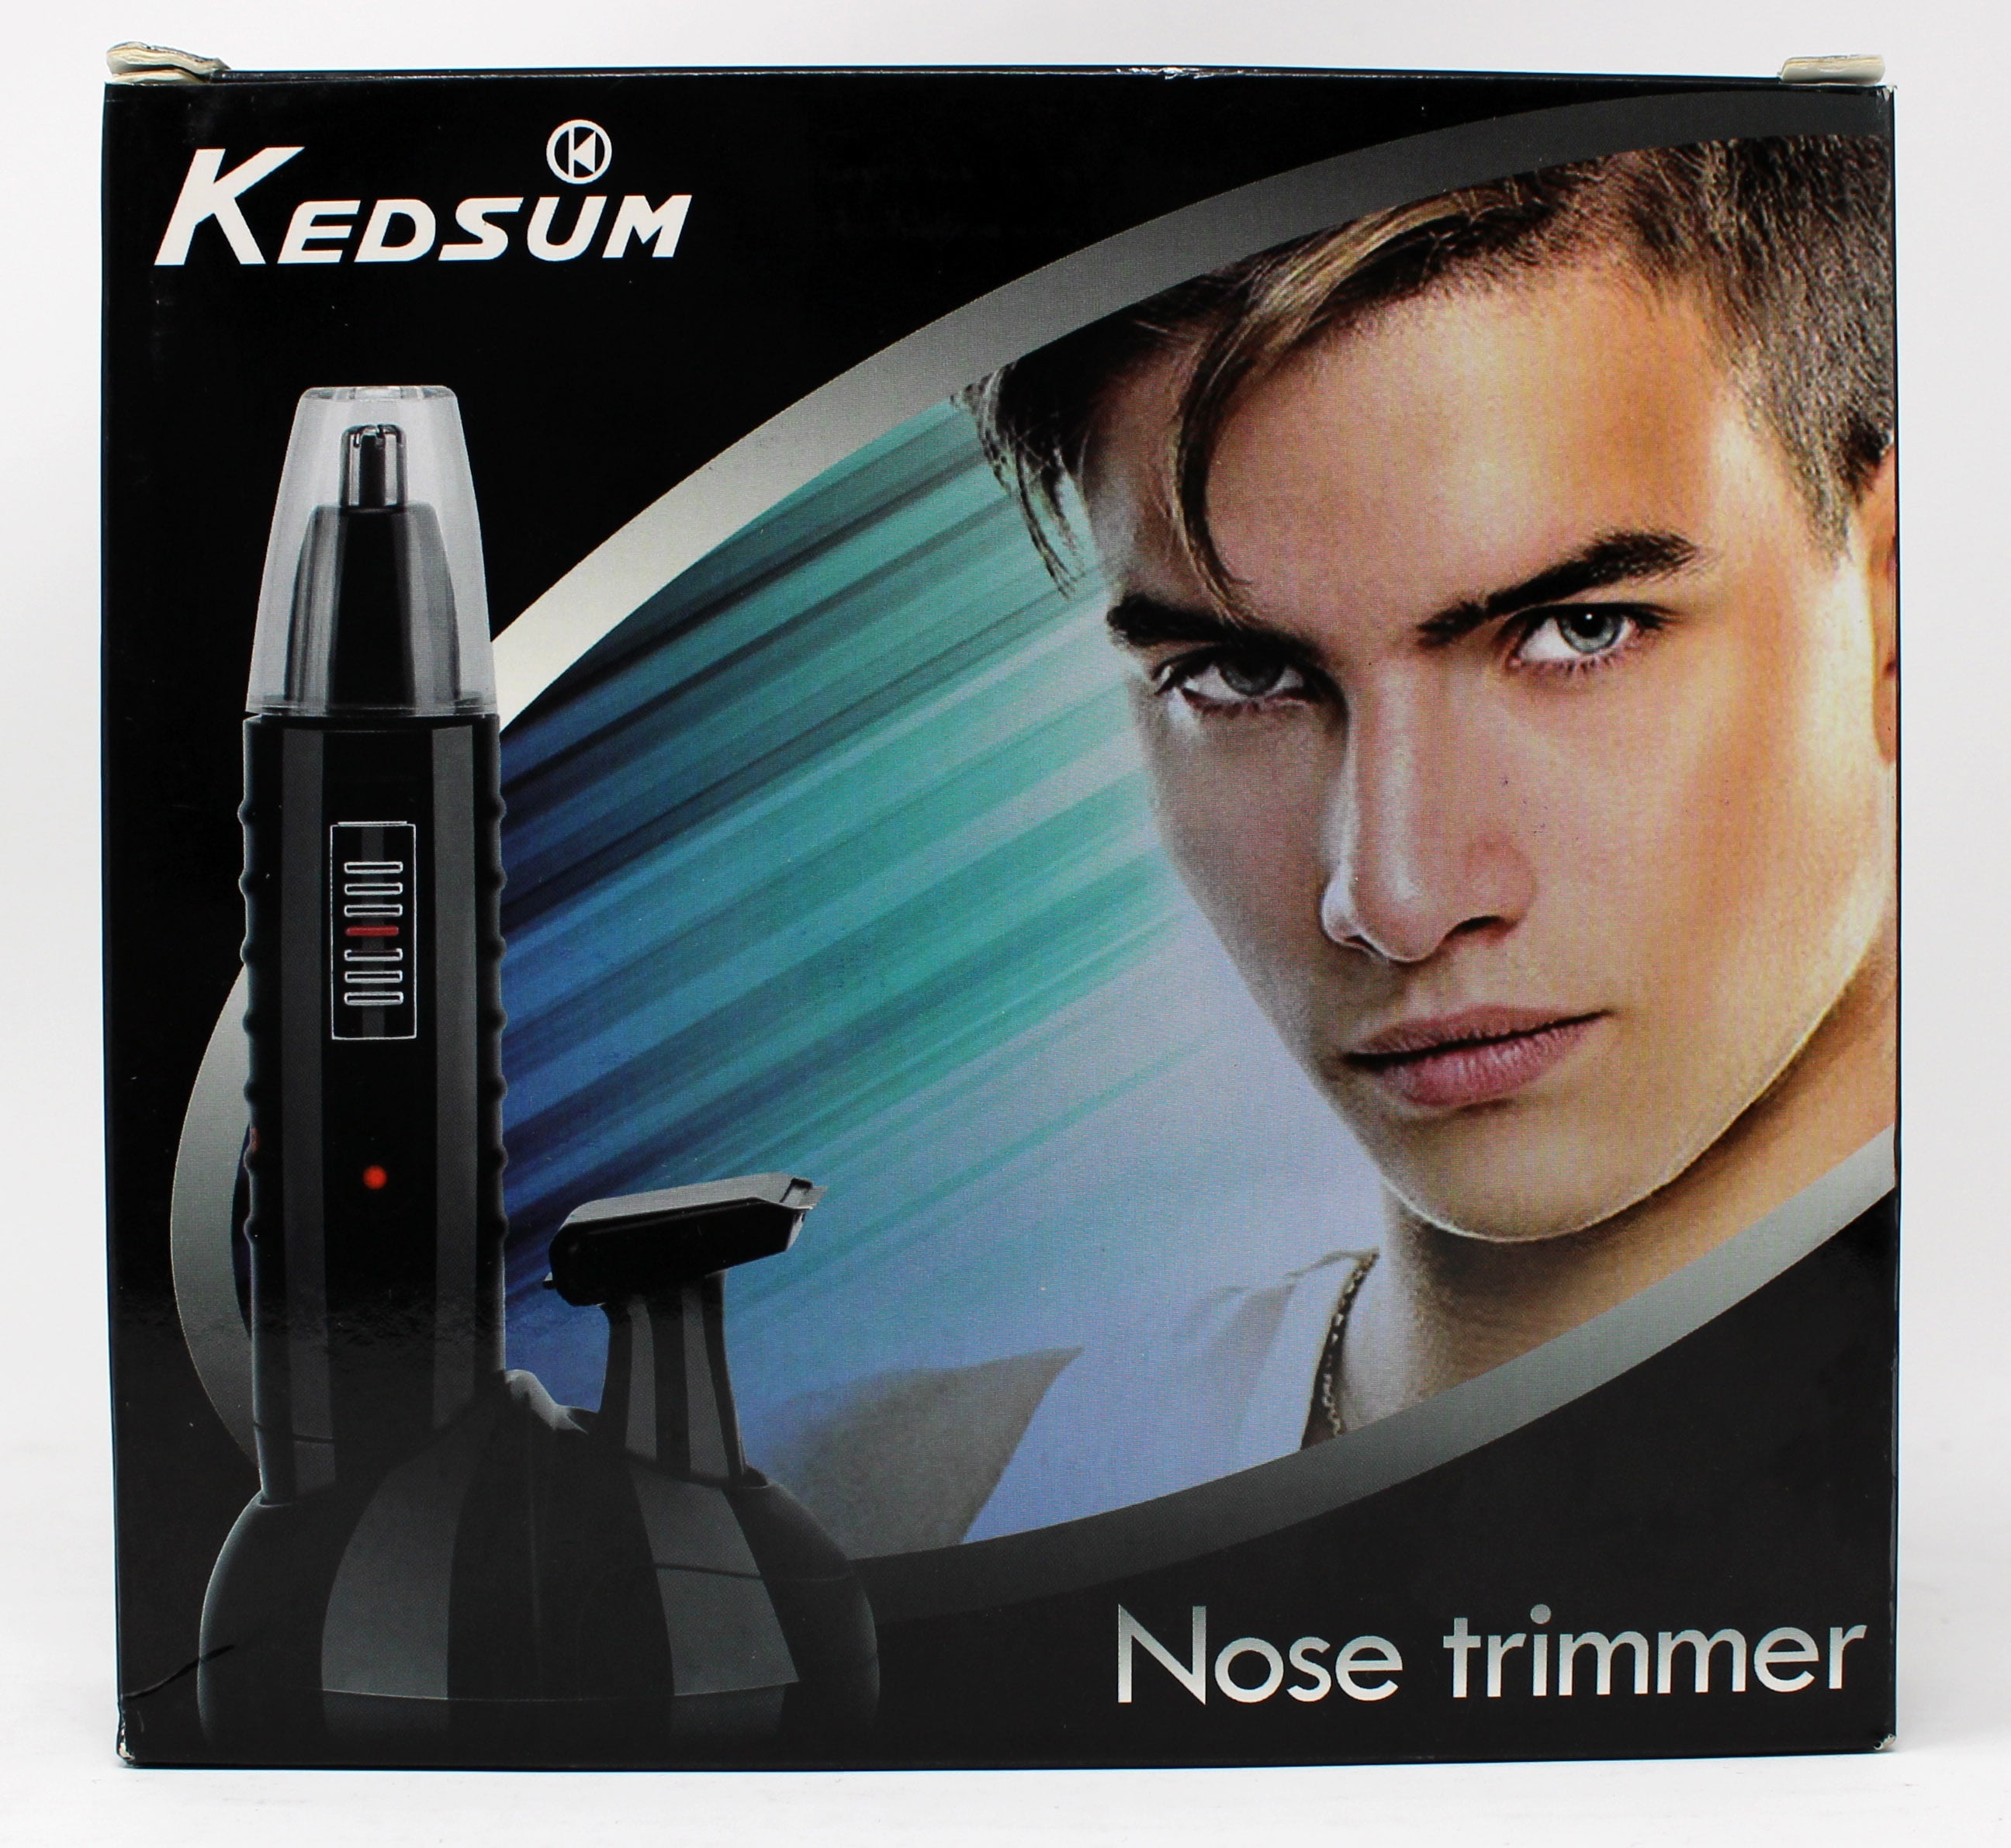 kedsum nose trimmer